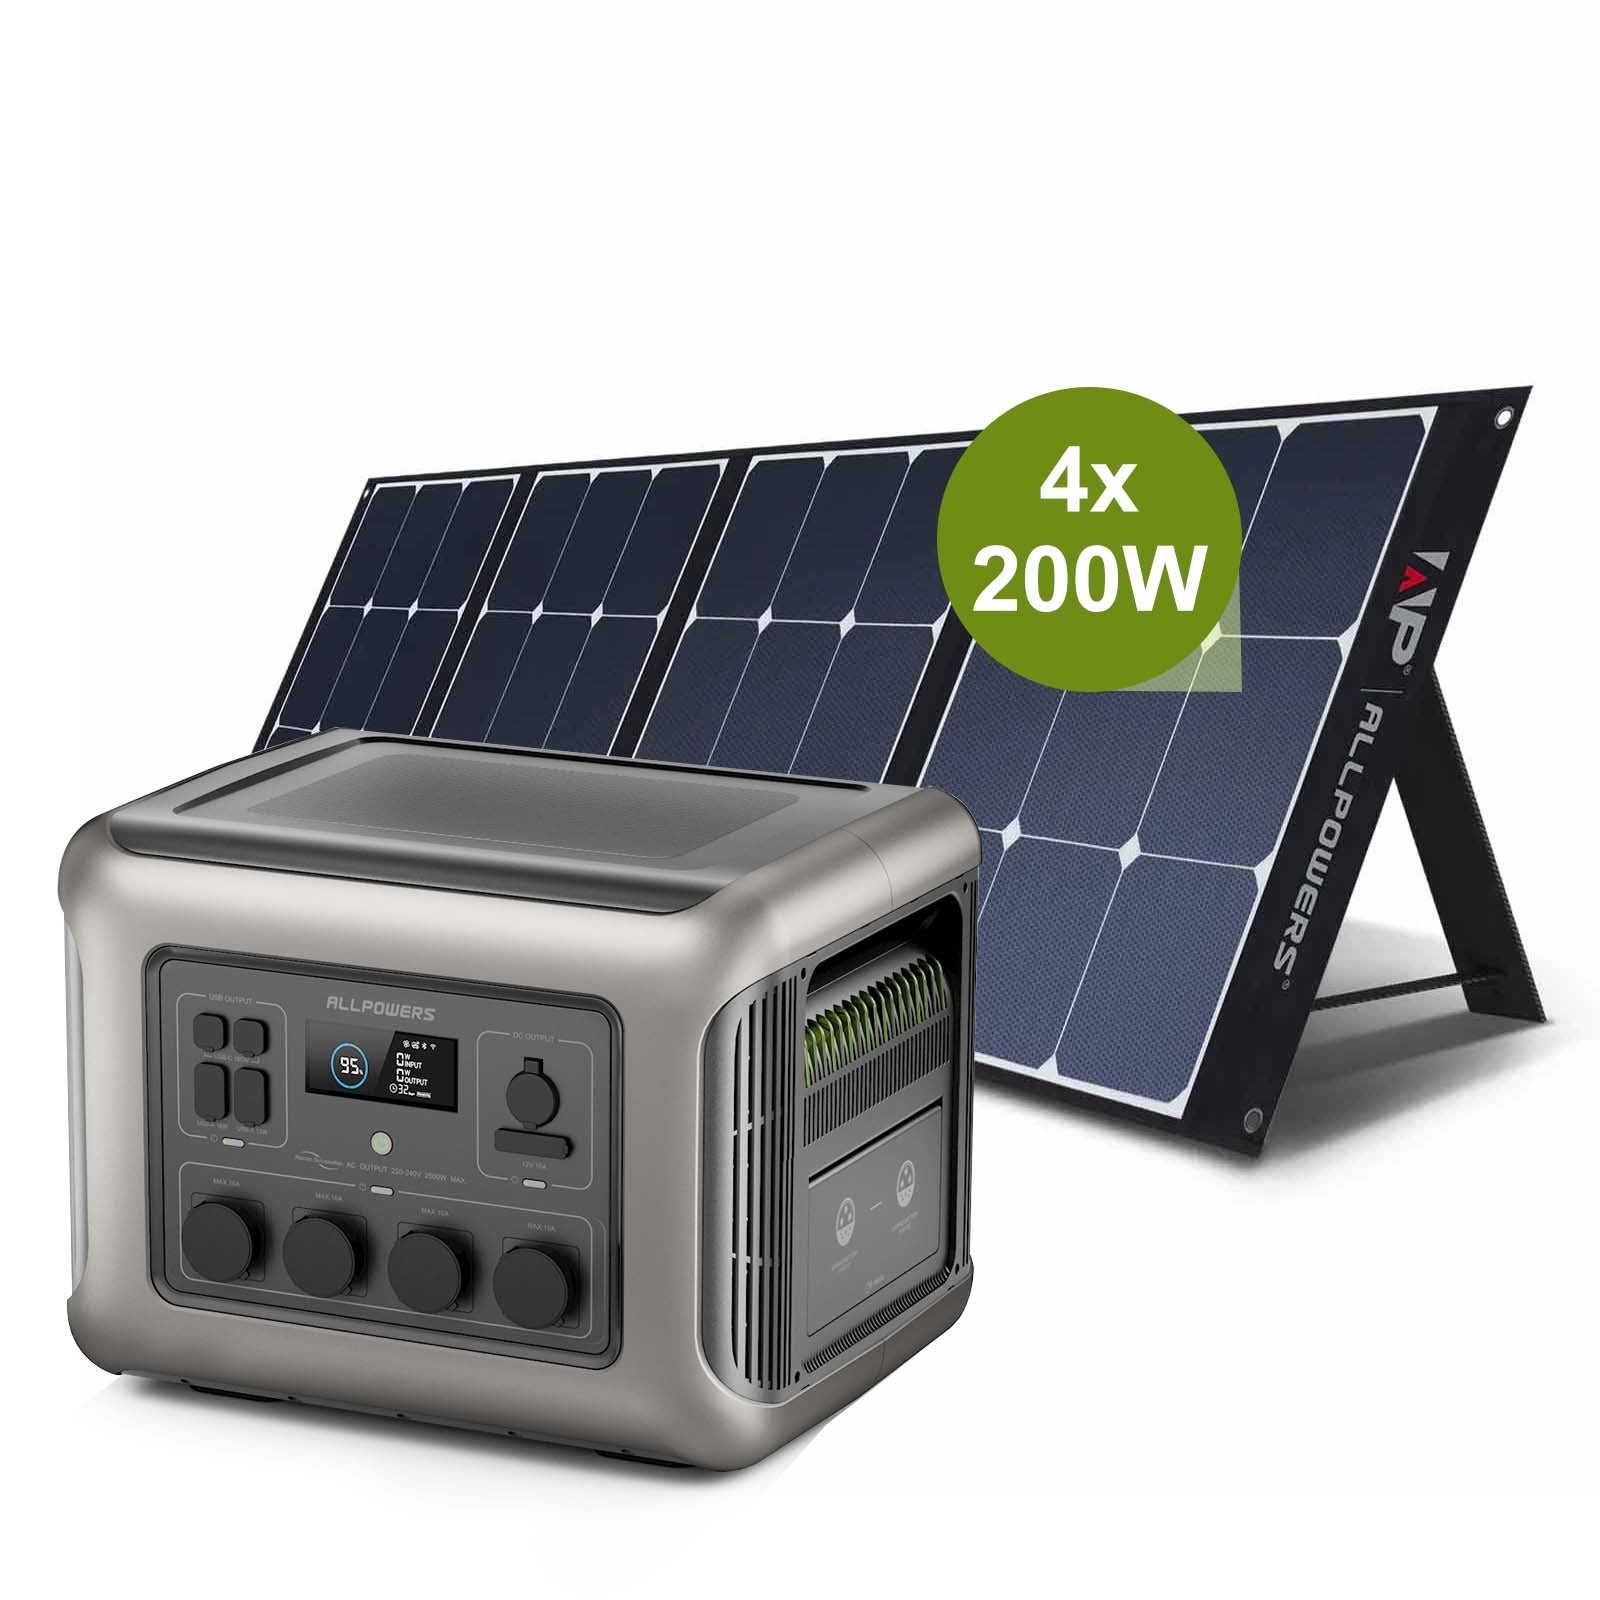 ALLPOWERS Solargenerator-Kit 2500W (R2500 + SP035 200W Solarpanel mit Monokristalliner Zelle)